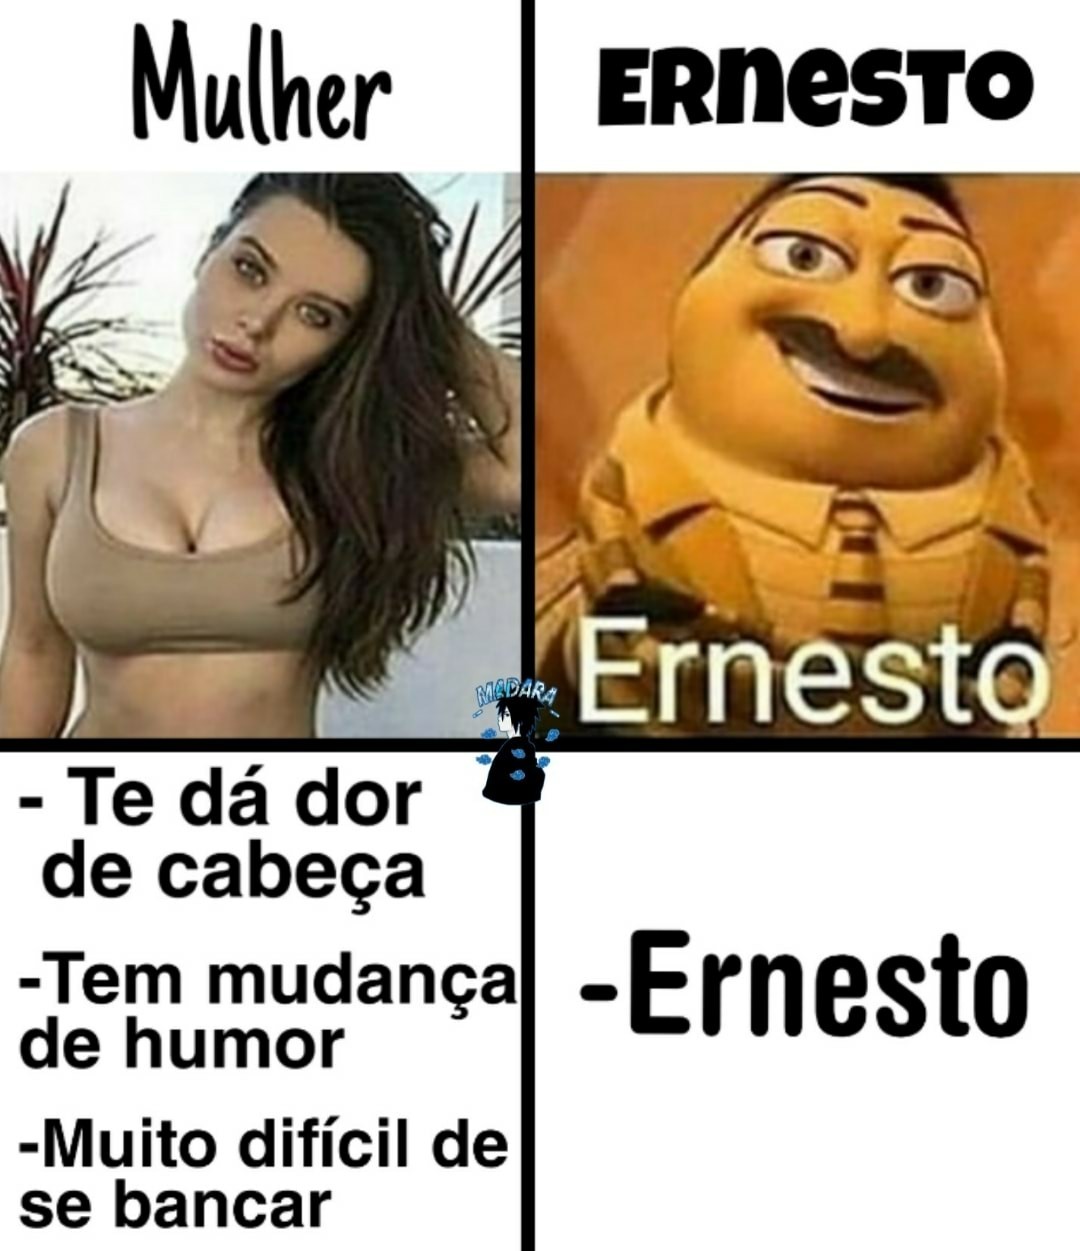 Ernesto - meme